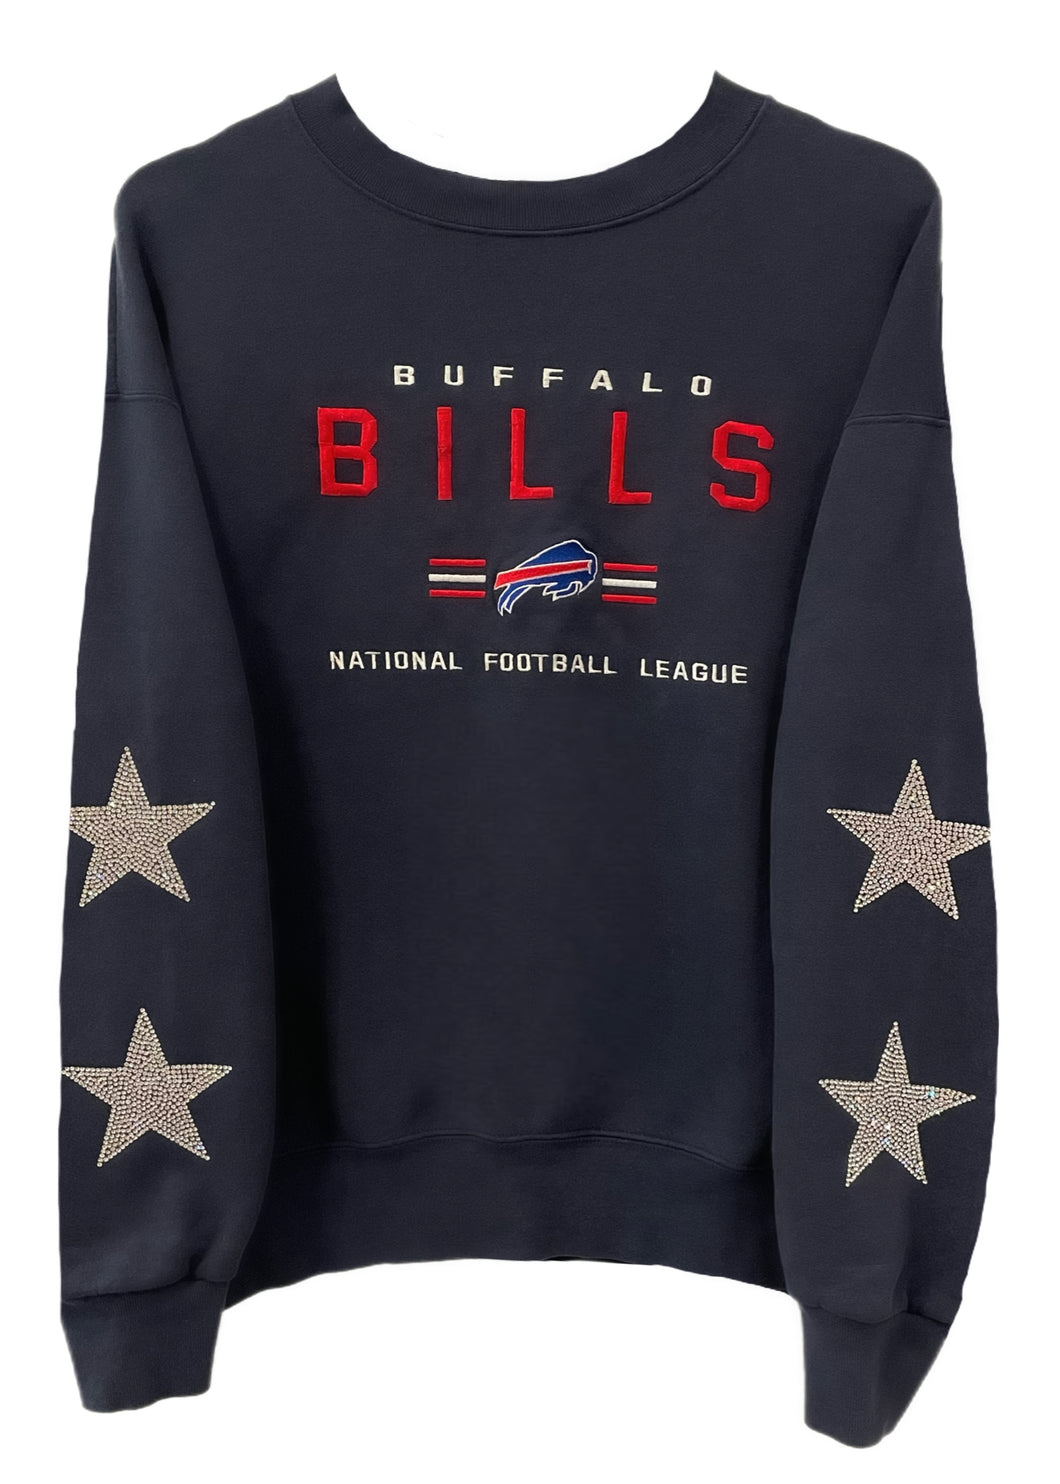 Buffalo Bills, Football One of a KIND Vintage Sweatshirt with Crystal Star Design